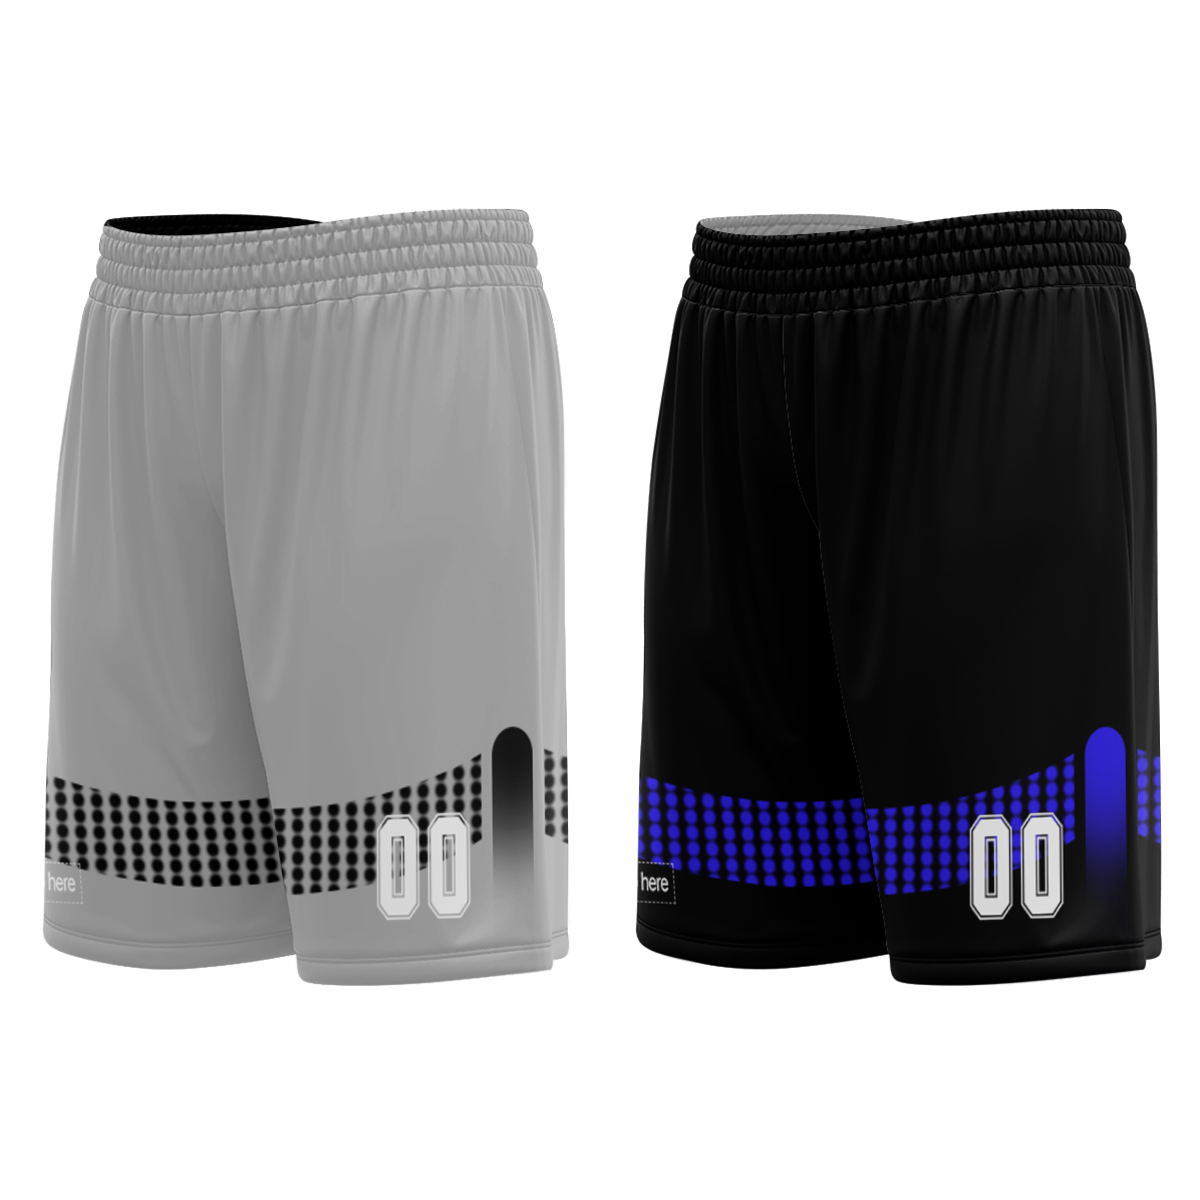 promotion-sales-large-size-sportswear-uniforms-new-design-customized-print-logo-reversible-basketball-jerseys-at-cj-pod-8